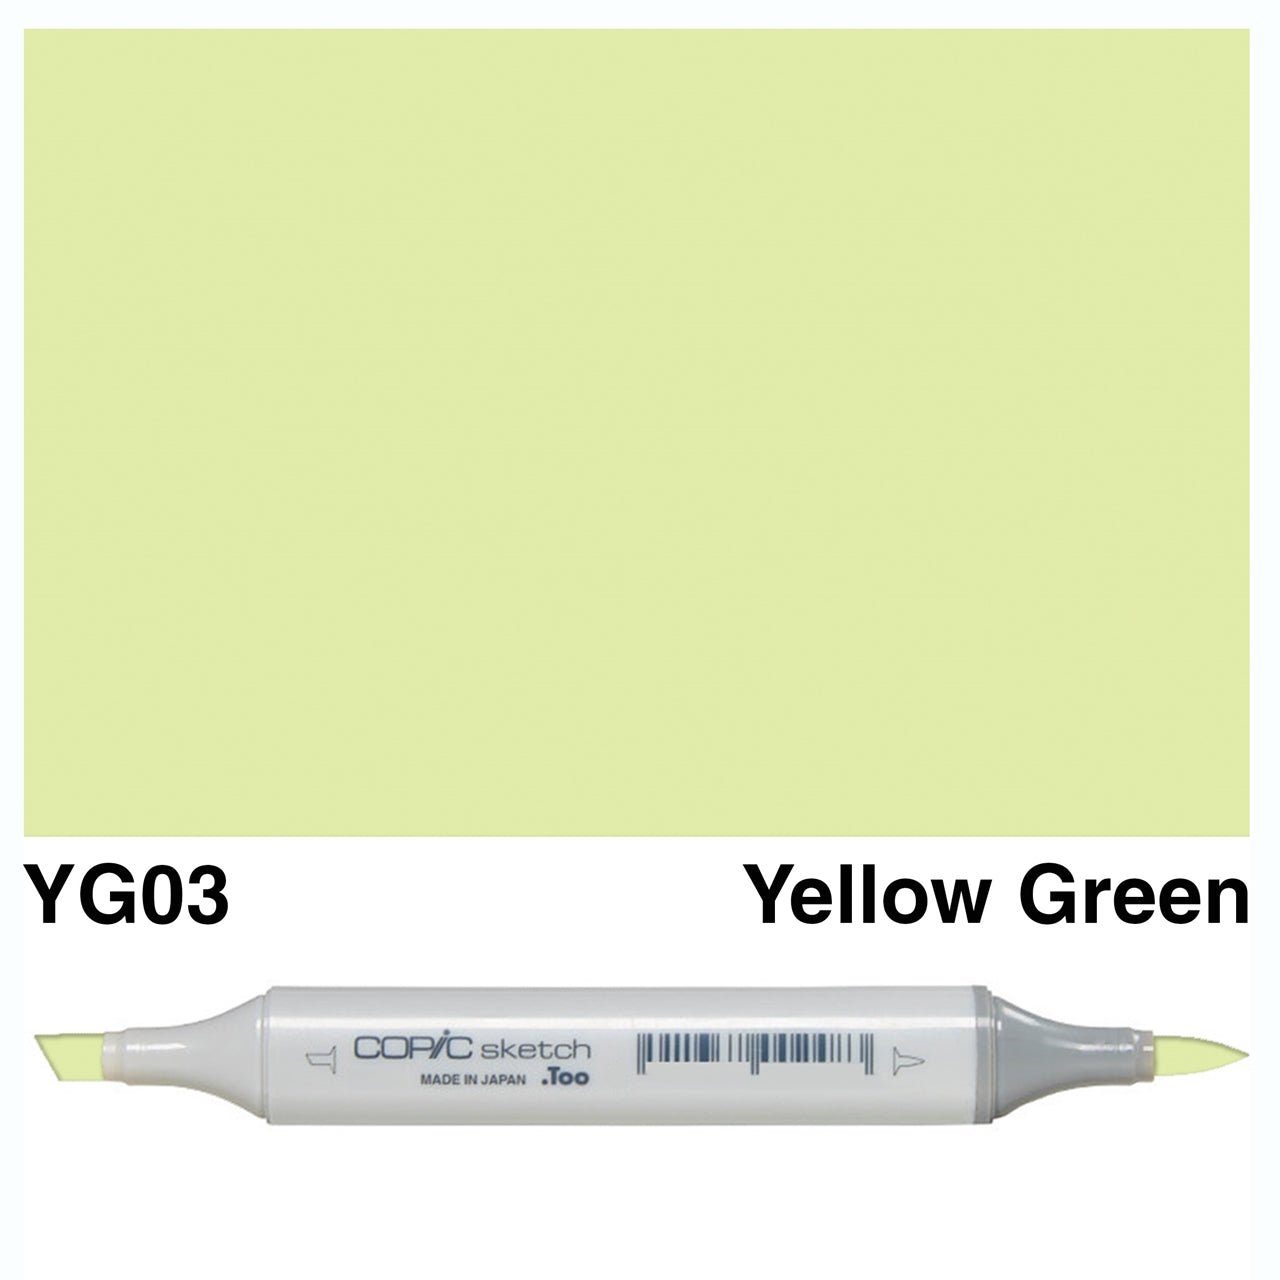 Copic Sketch YG03 Yellow Green - theartshop.com.au